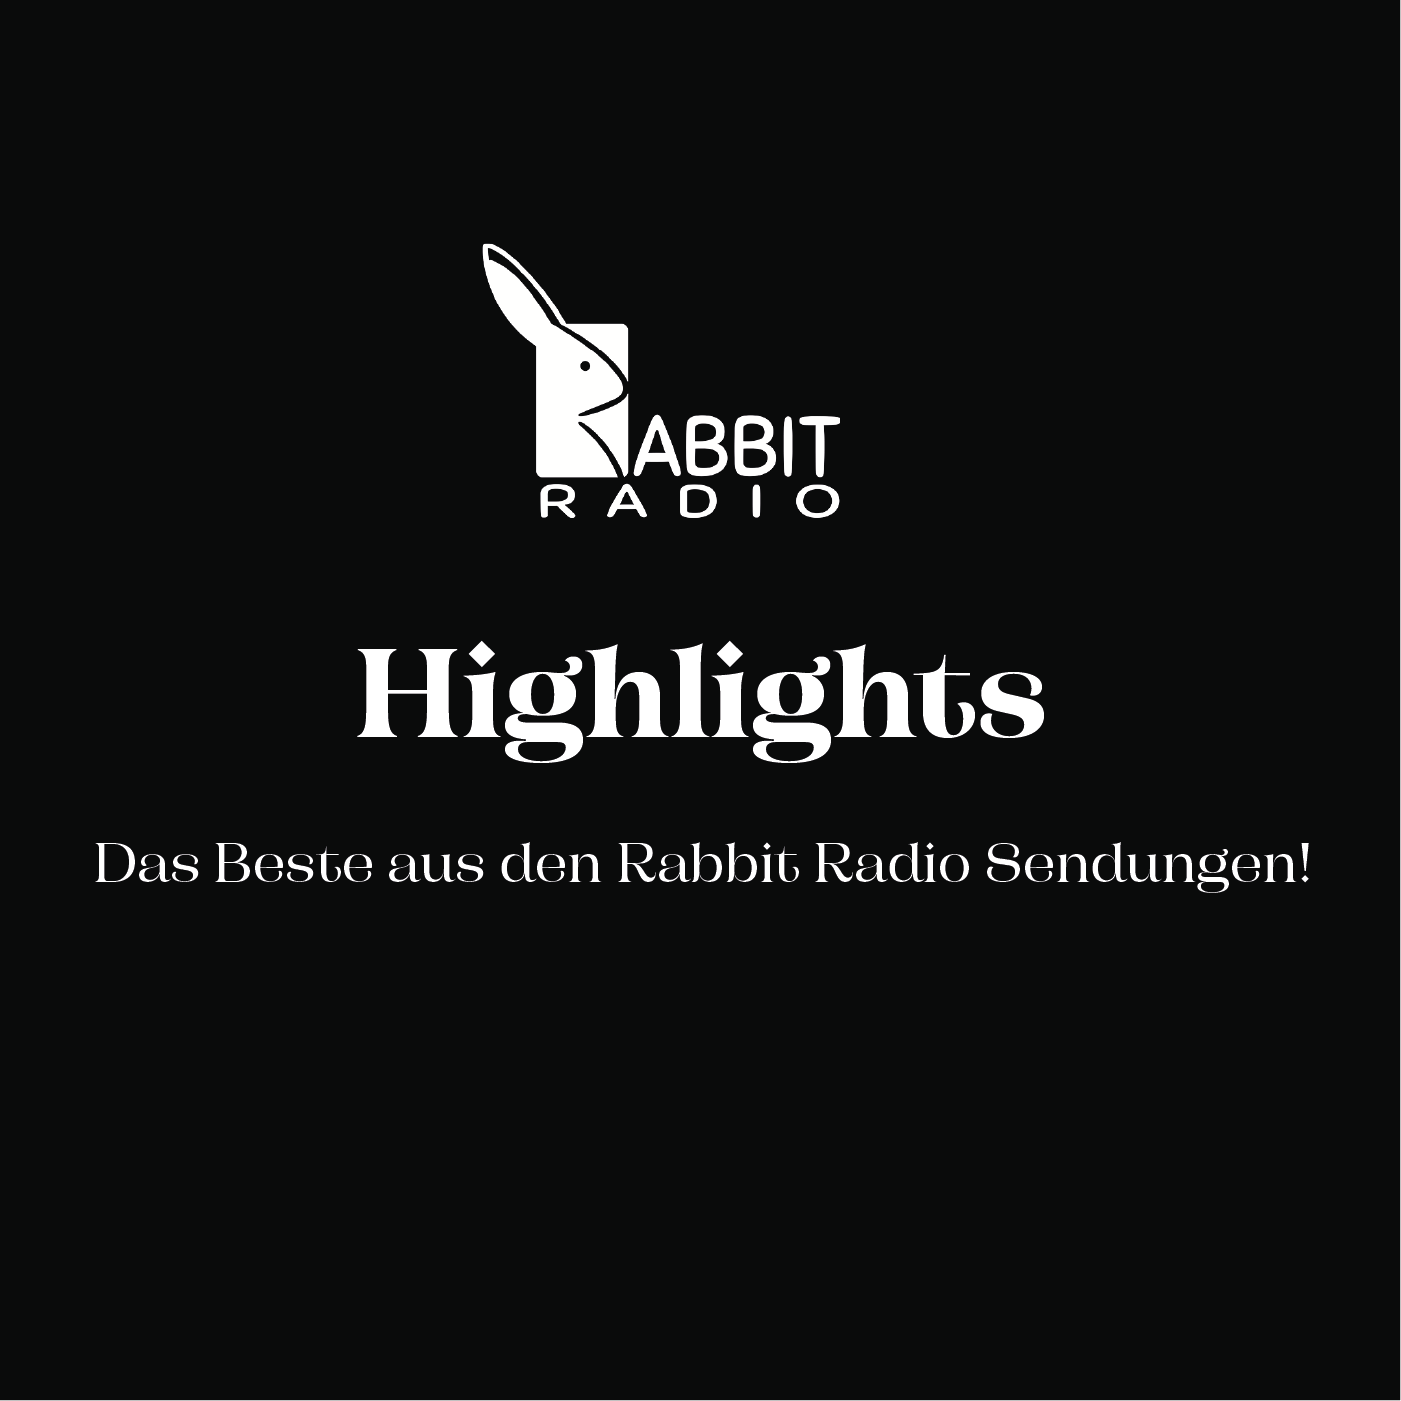 Rabbit Radio Logo -Highlights